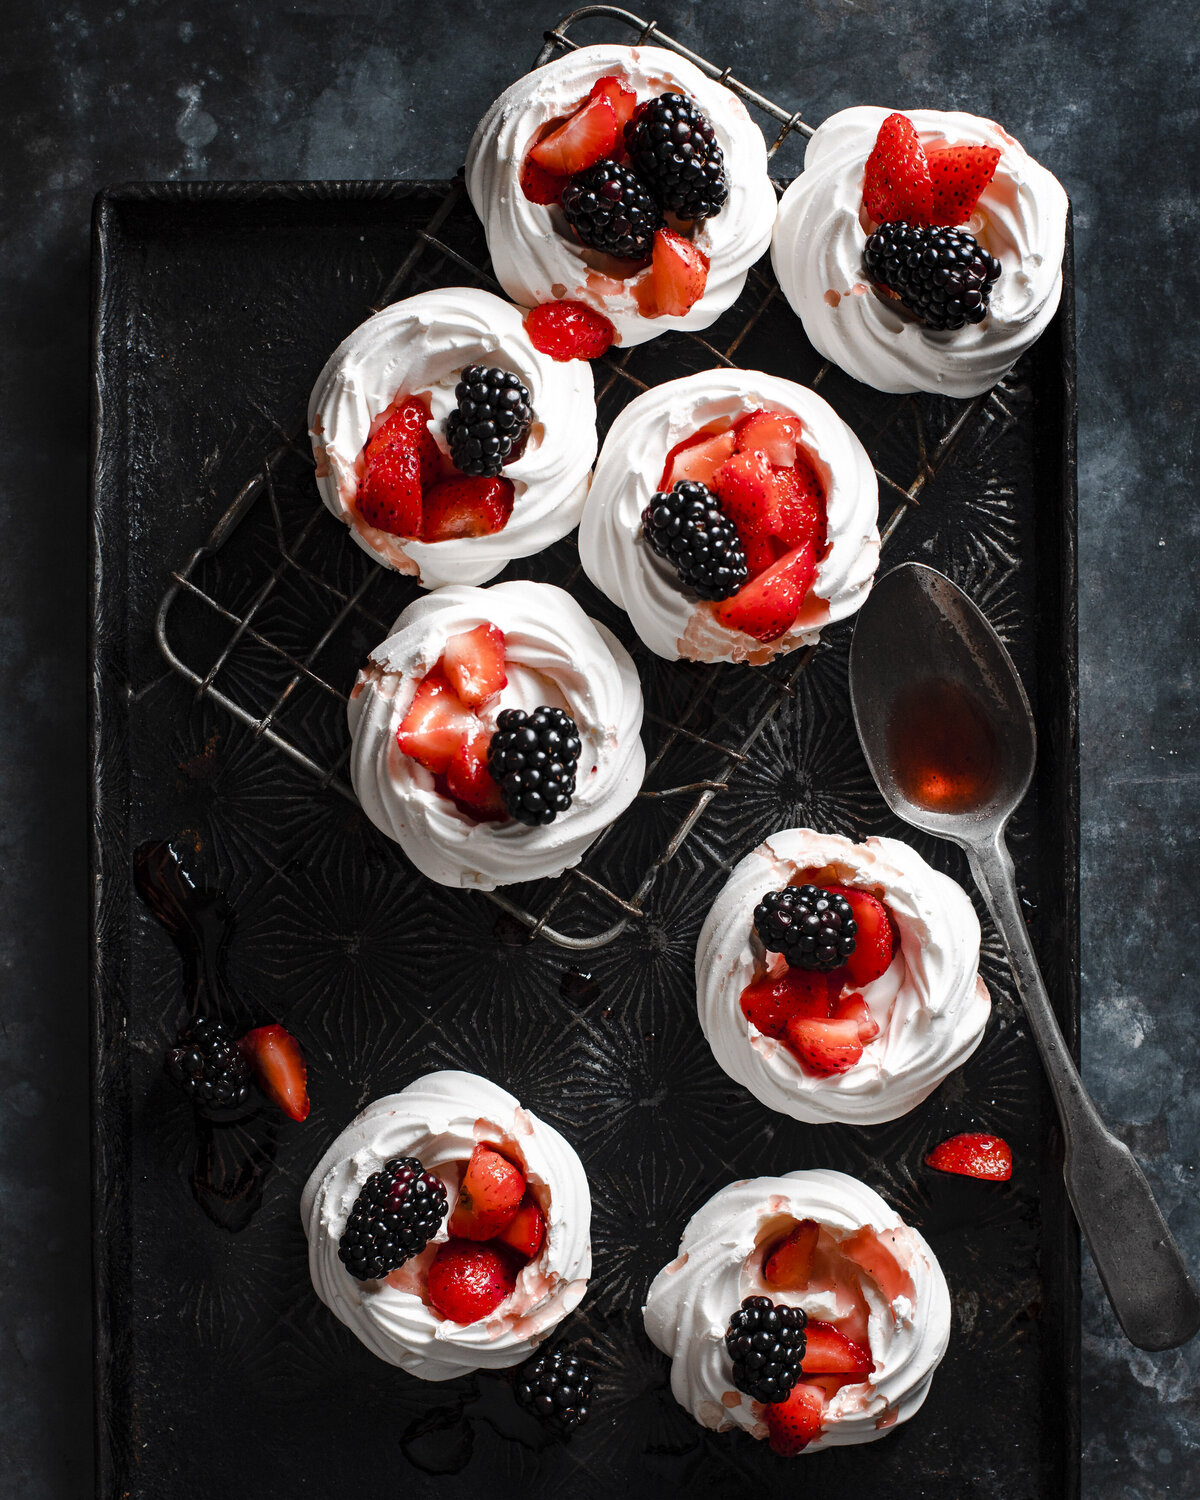 Overhead image of berry meringues with berries on top.